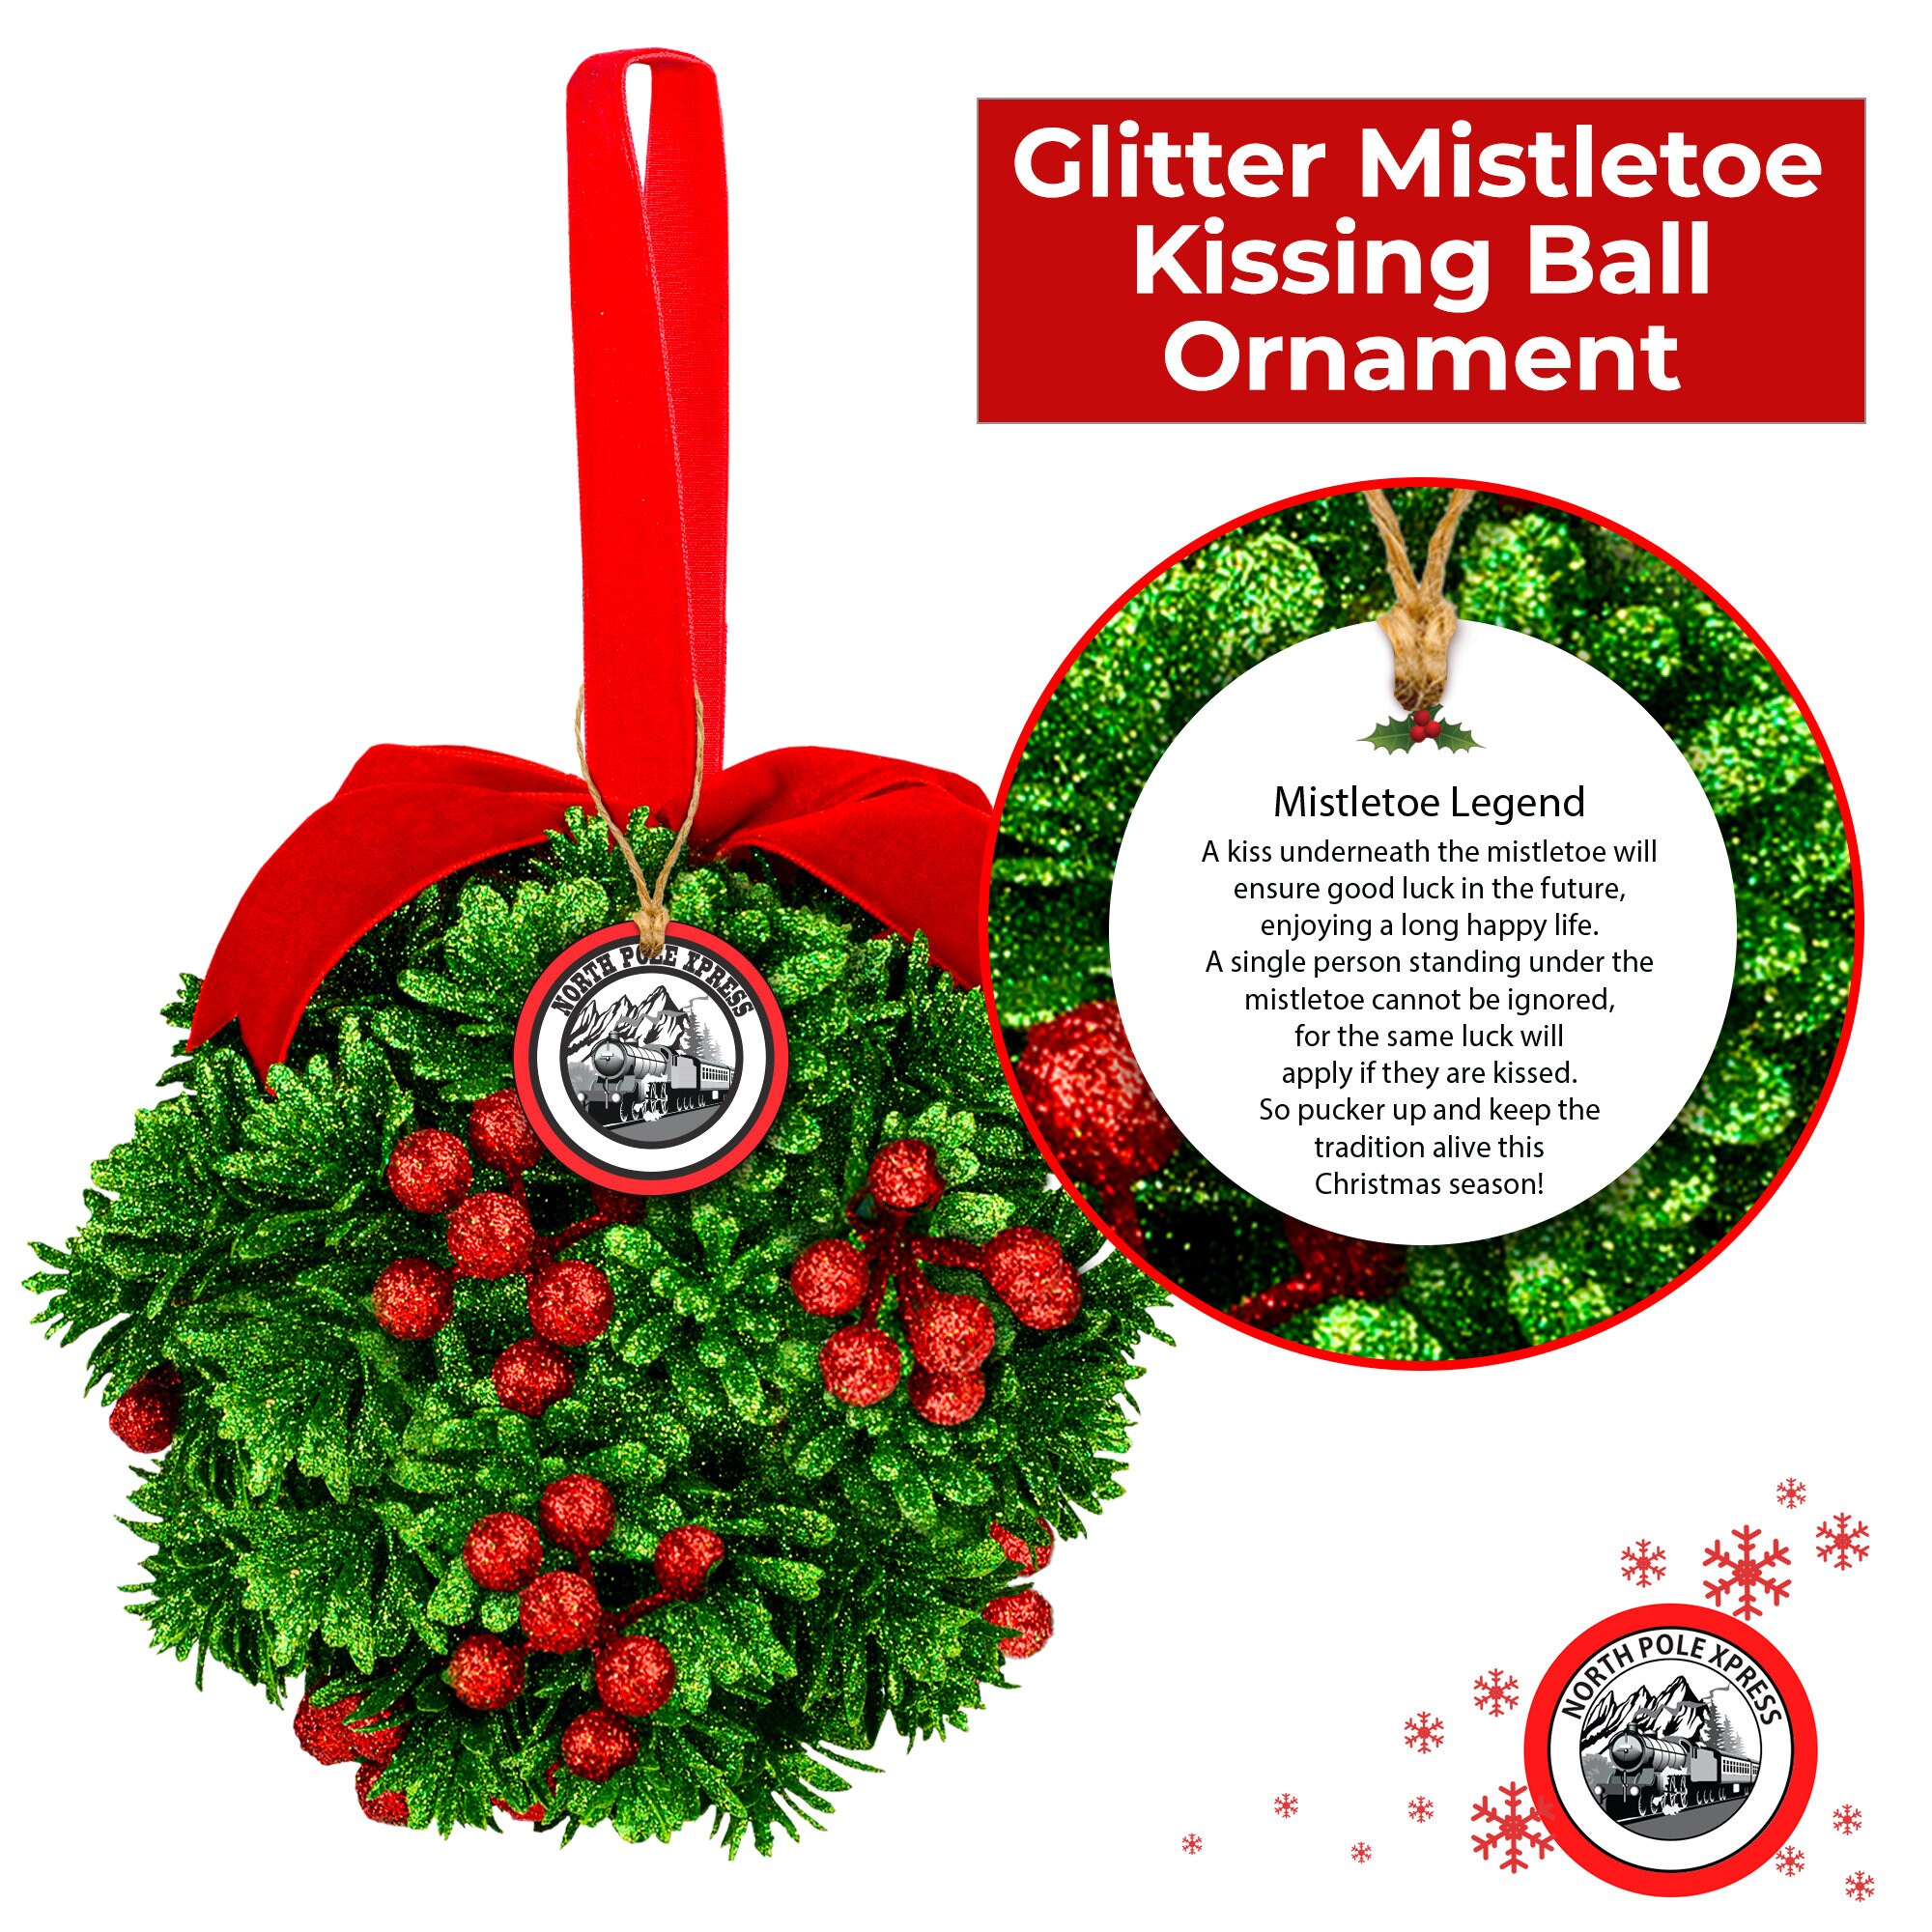 1 inch Mini Peppermint Red/White Glass Ball Ornaments - box 25 –  ChristmasCottage